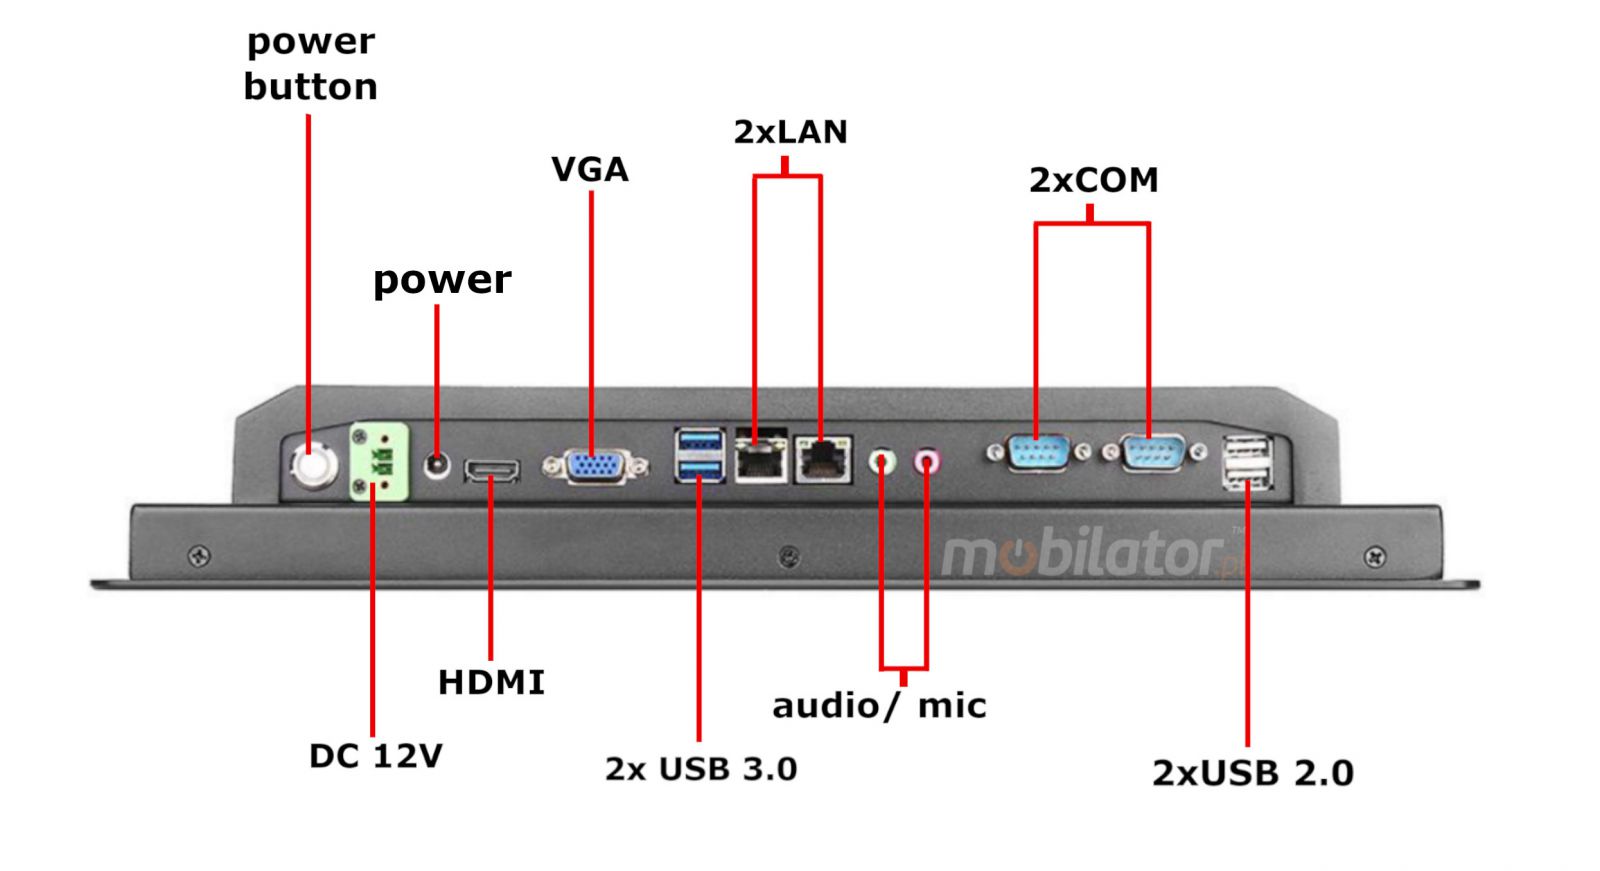 BIBOX-190PC2 connectors:  2x USB 2.0| 2xUSB 3.0 |2x COM | 4x LAN| 1x VGA | 1x HDMI |DC 12V